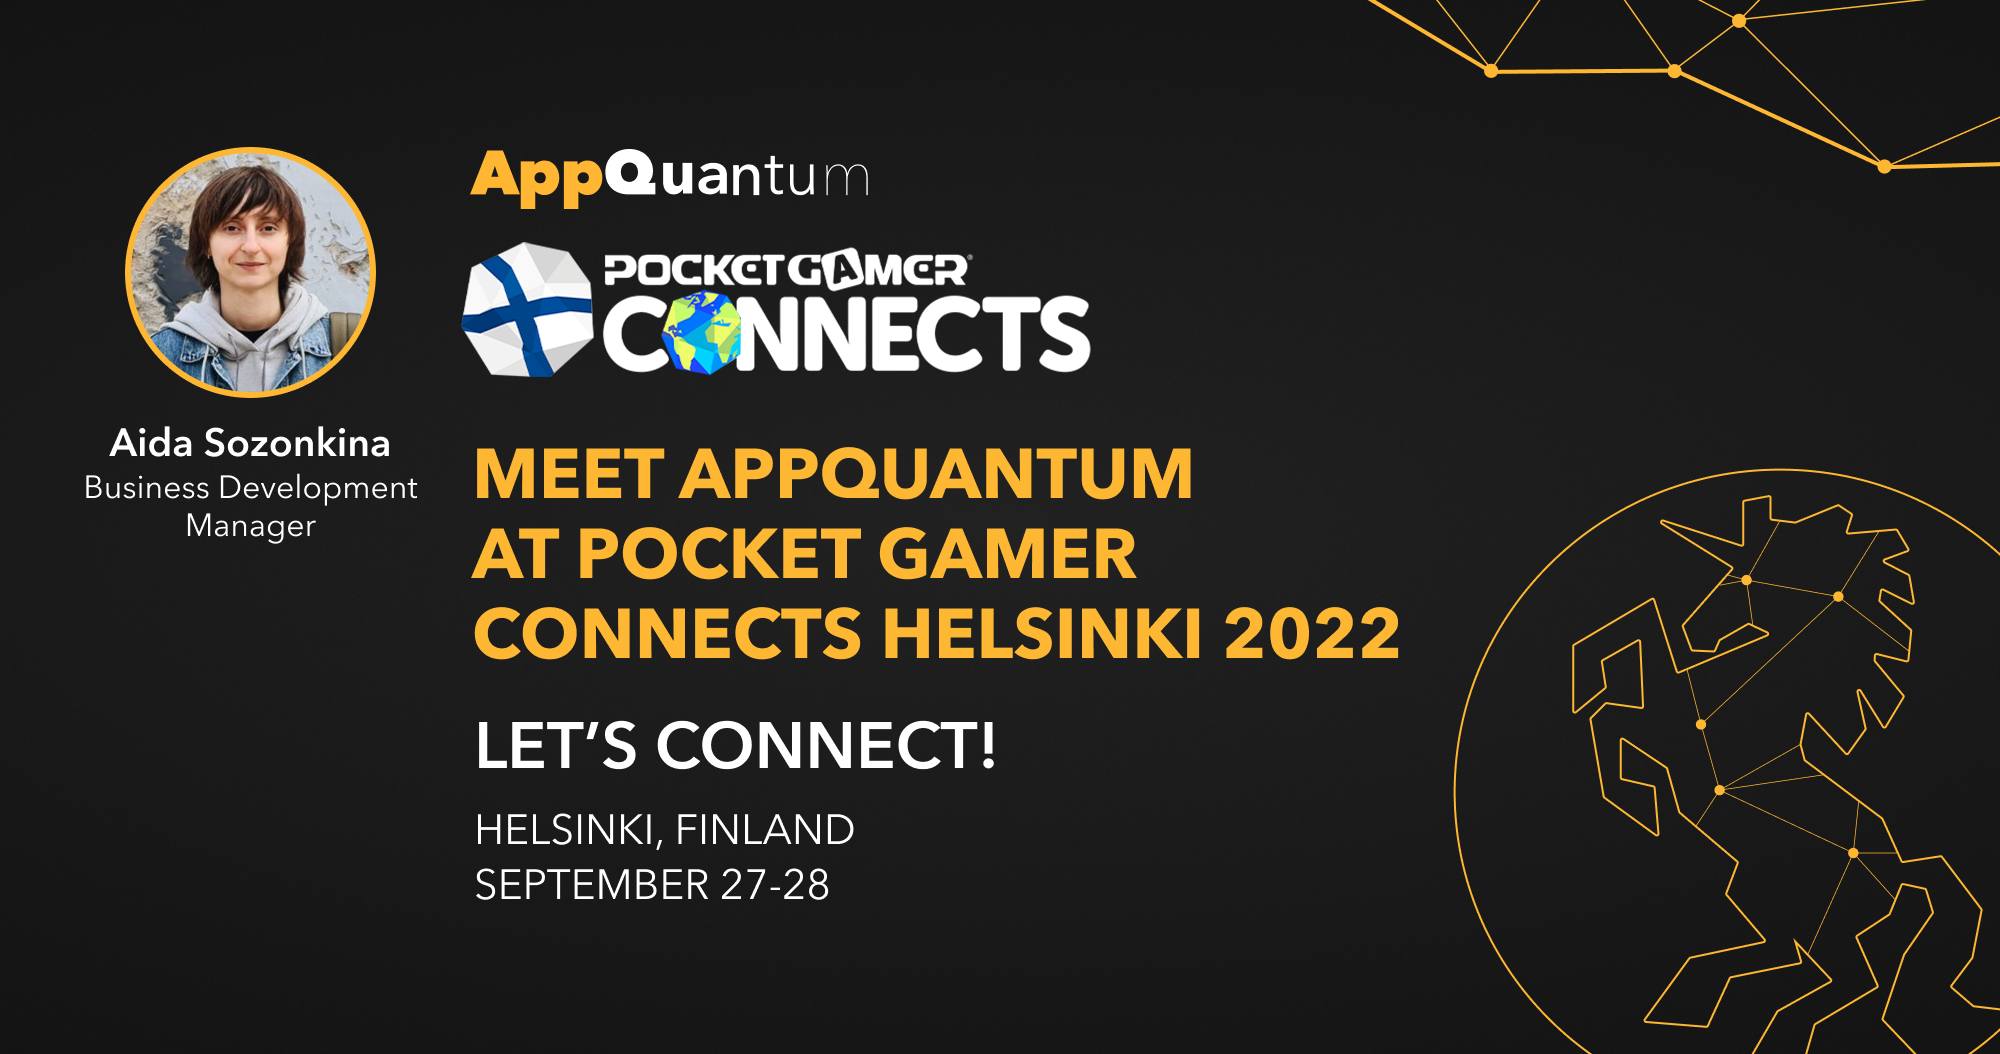 Meet AppQuantum at Pocket Gamer Connects Helsinki 2022!